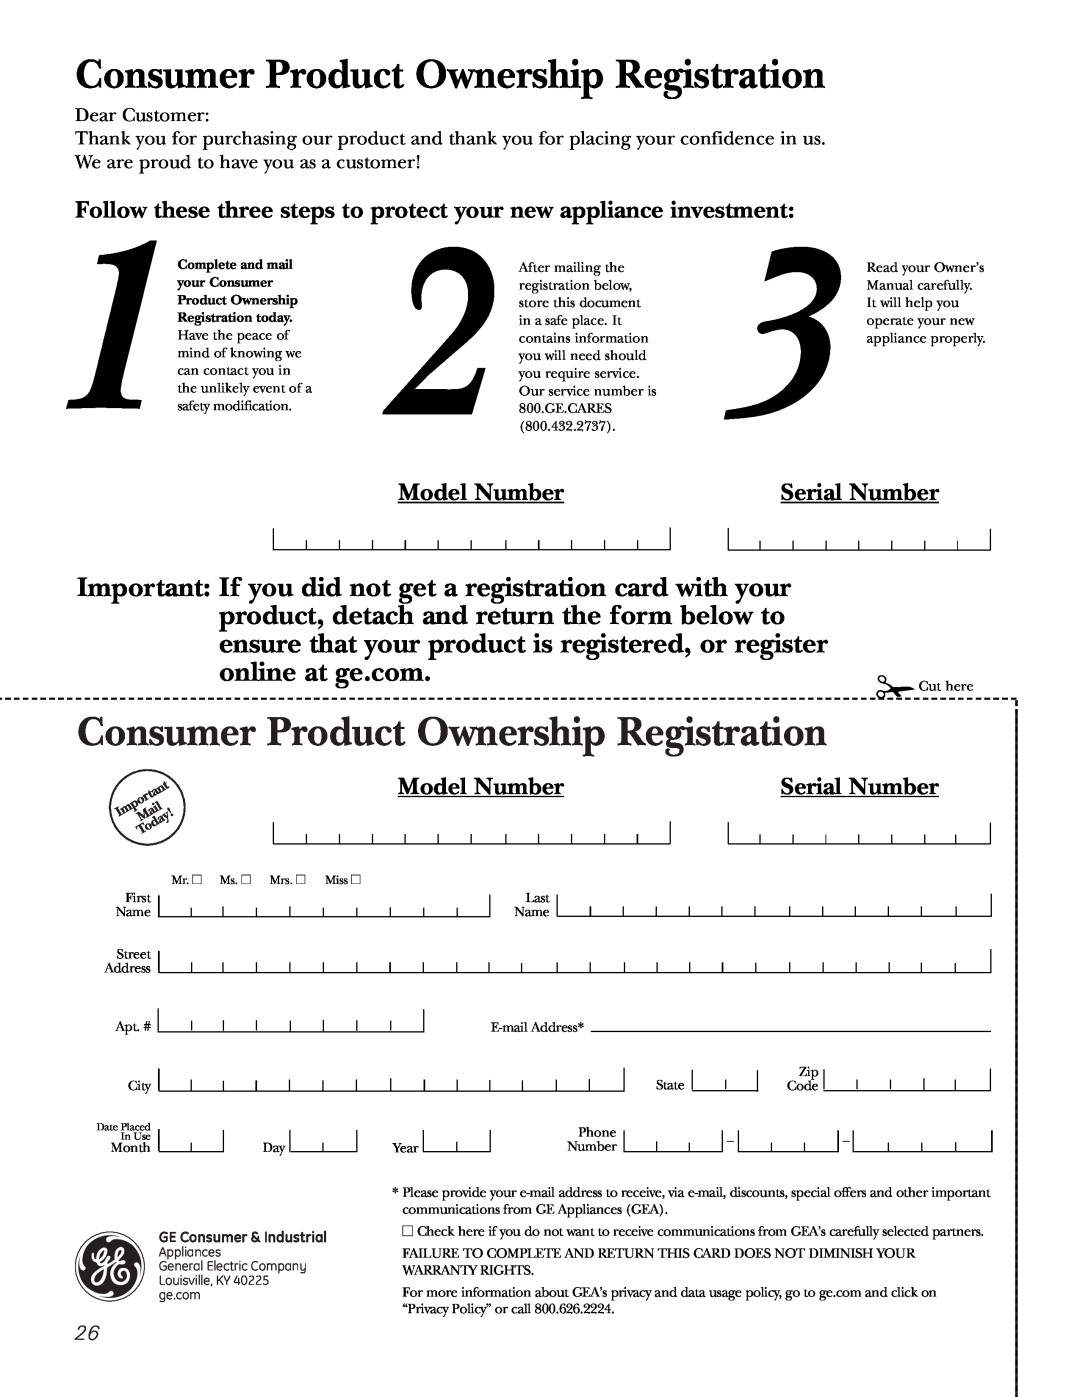 GE JTP2030 Model Number, Serial Number, Consumer Product Ownership Registration, online at ge.com, Complete and mail 